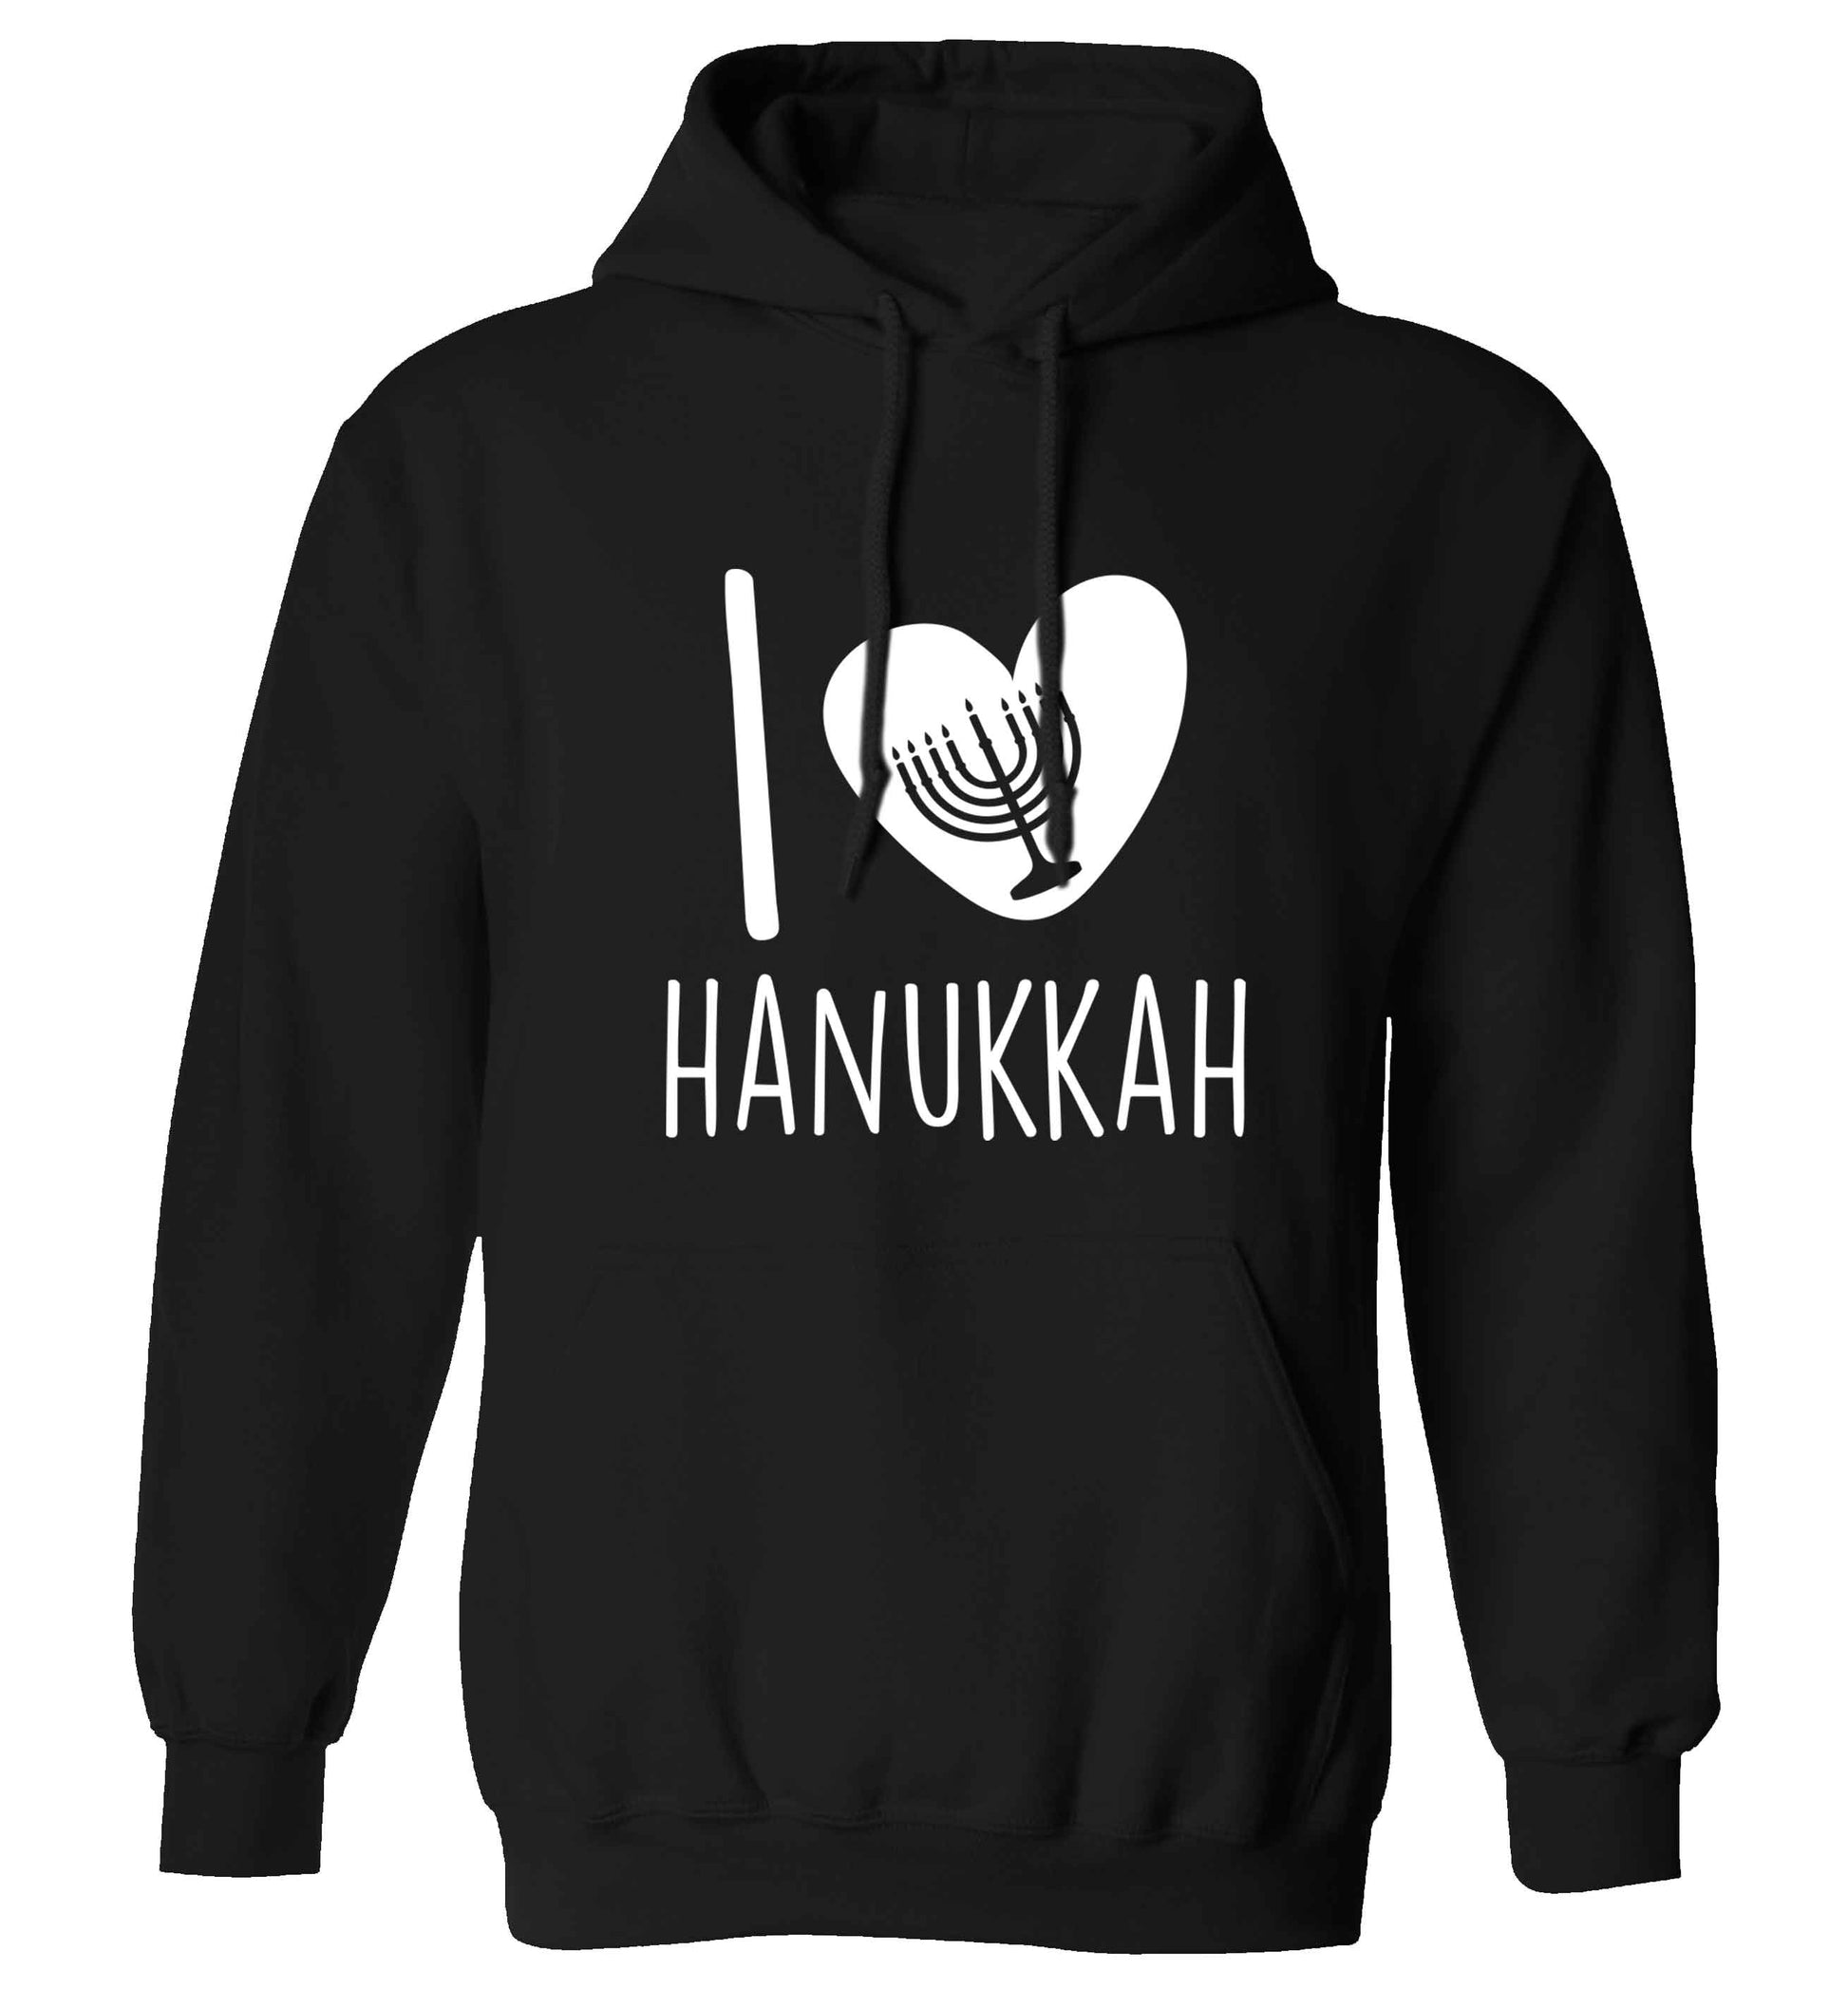 I love hanukkah adults unisex black hoodie 2XL